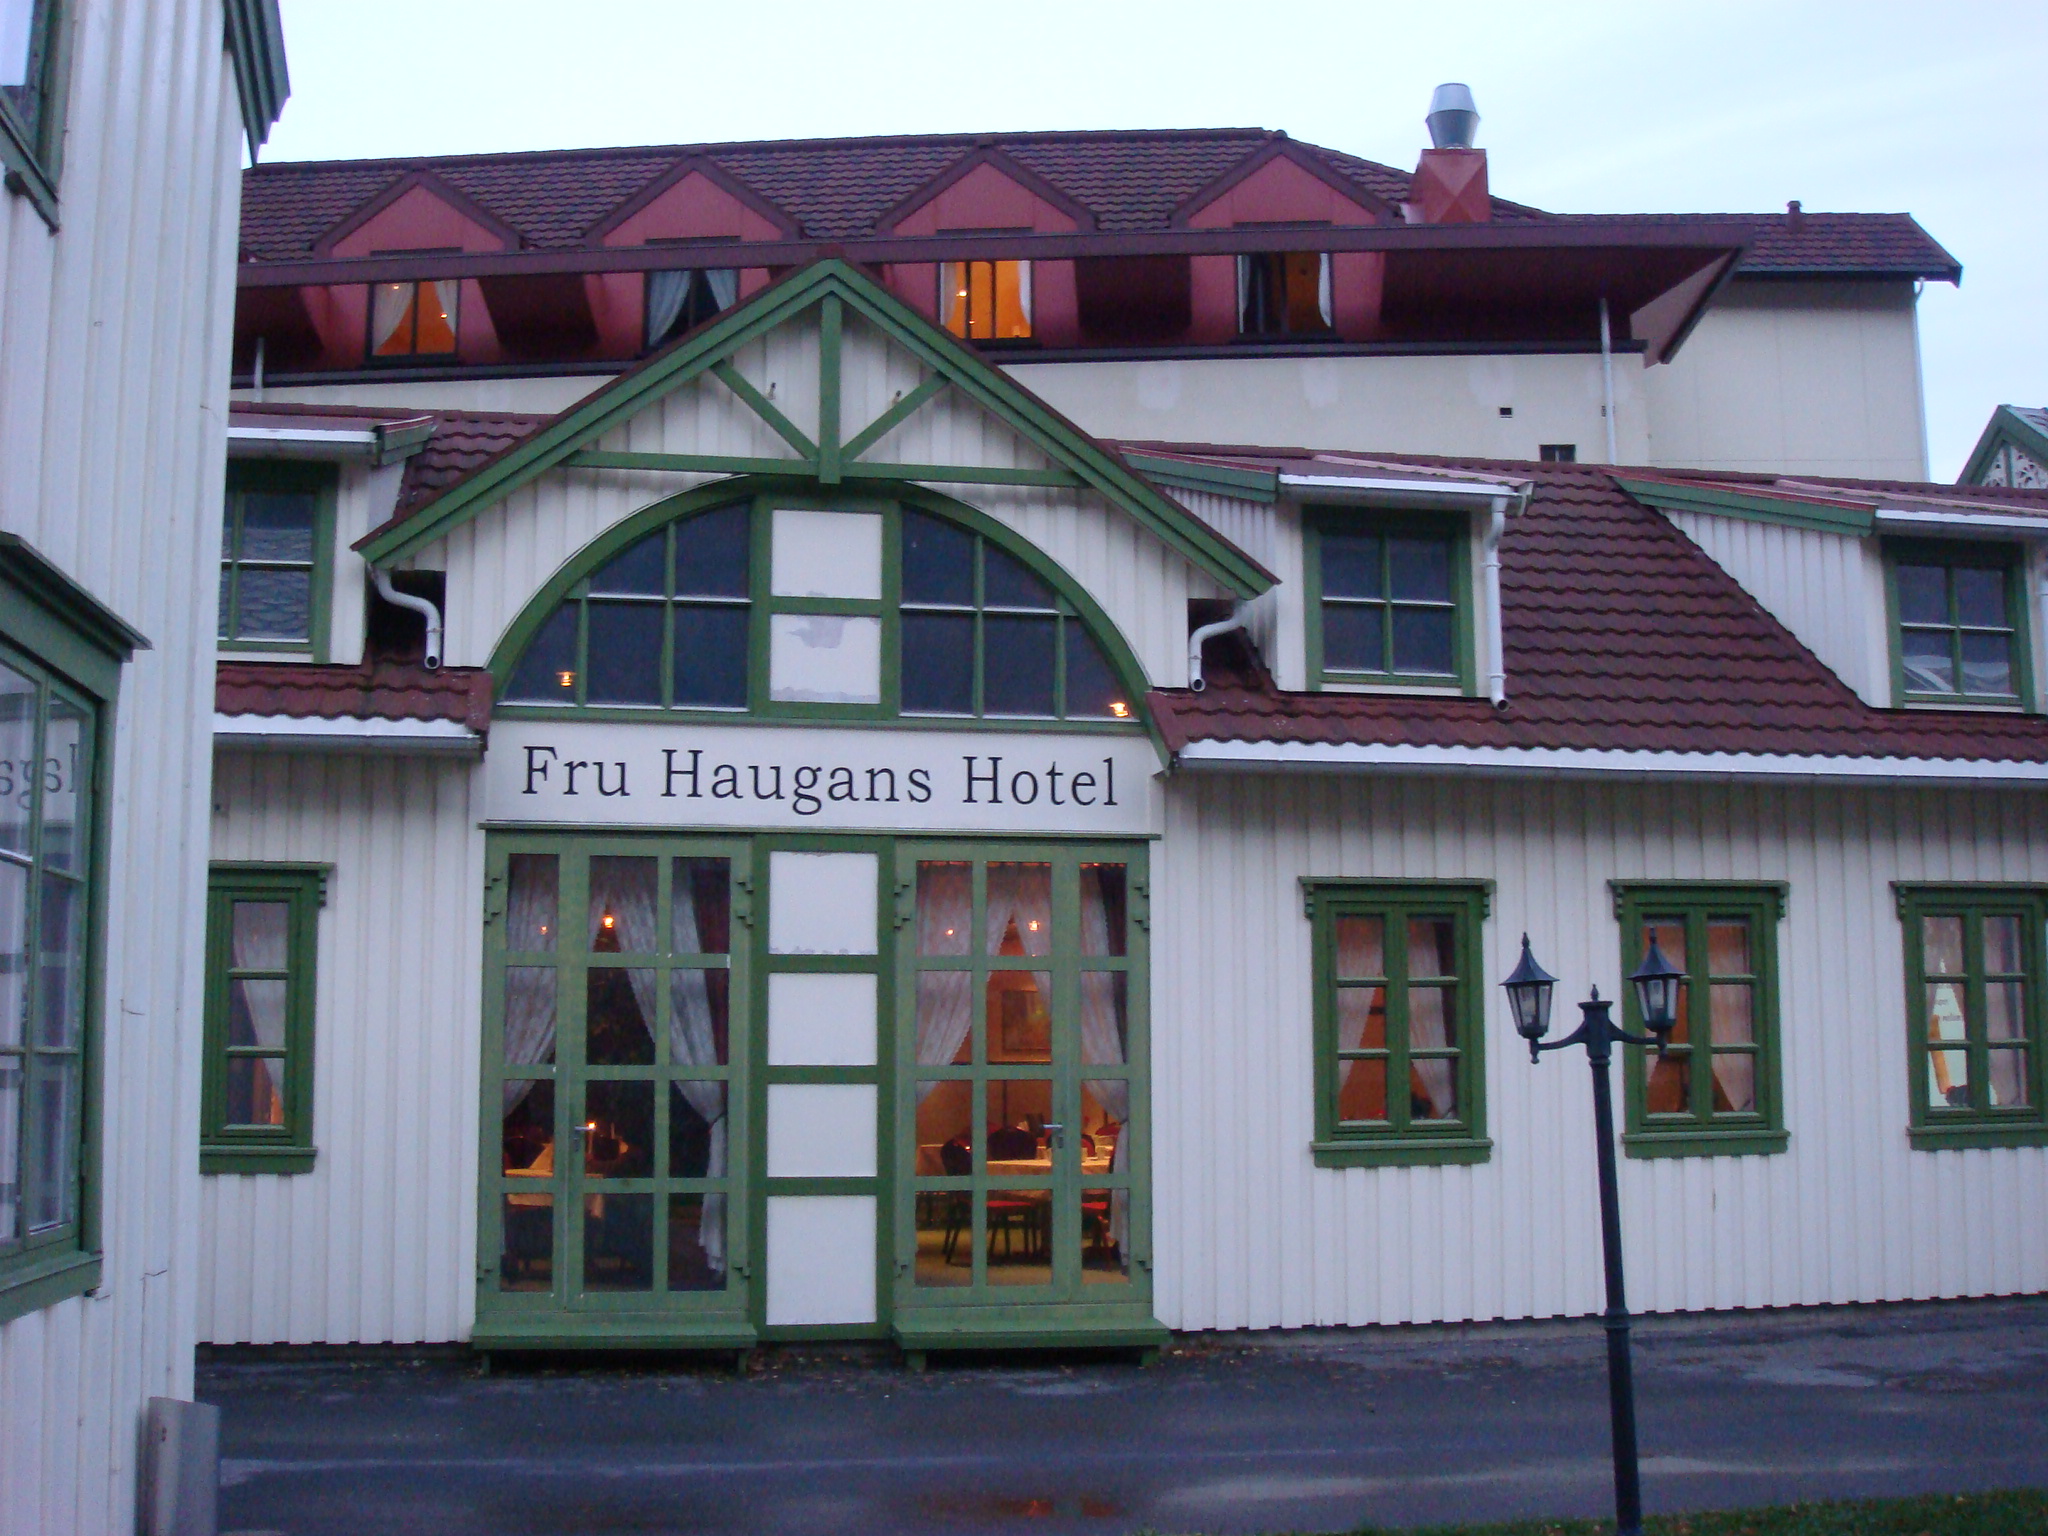 Turtreff på Fru Haugans Hotel i Mosjøen